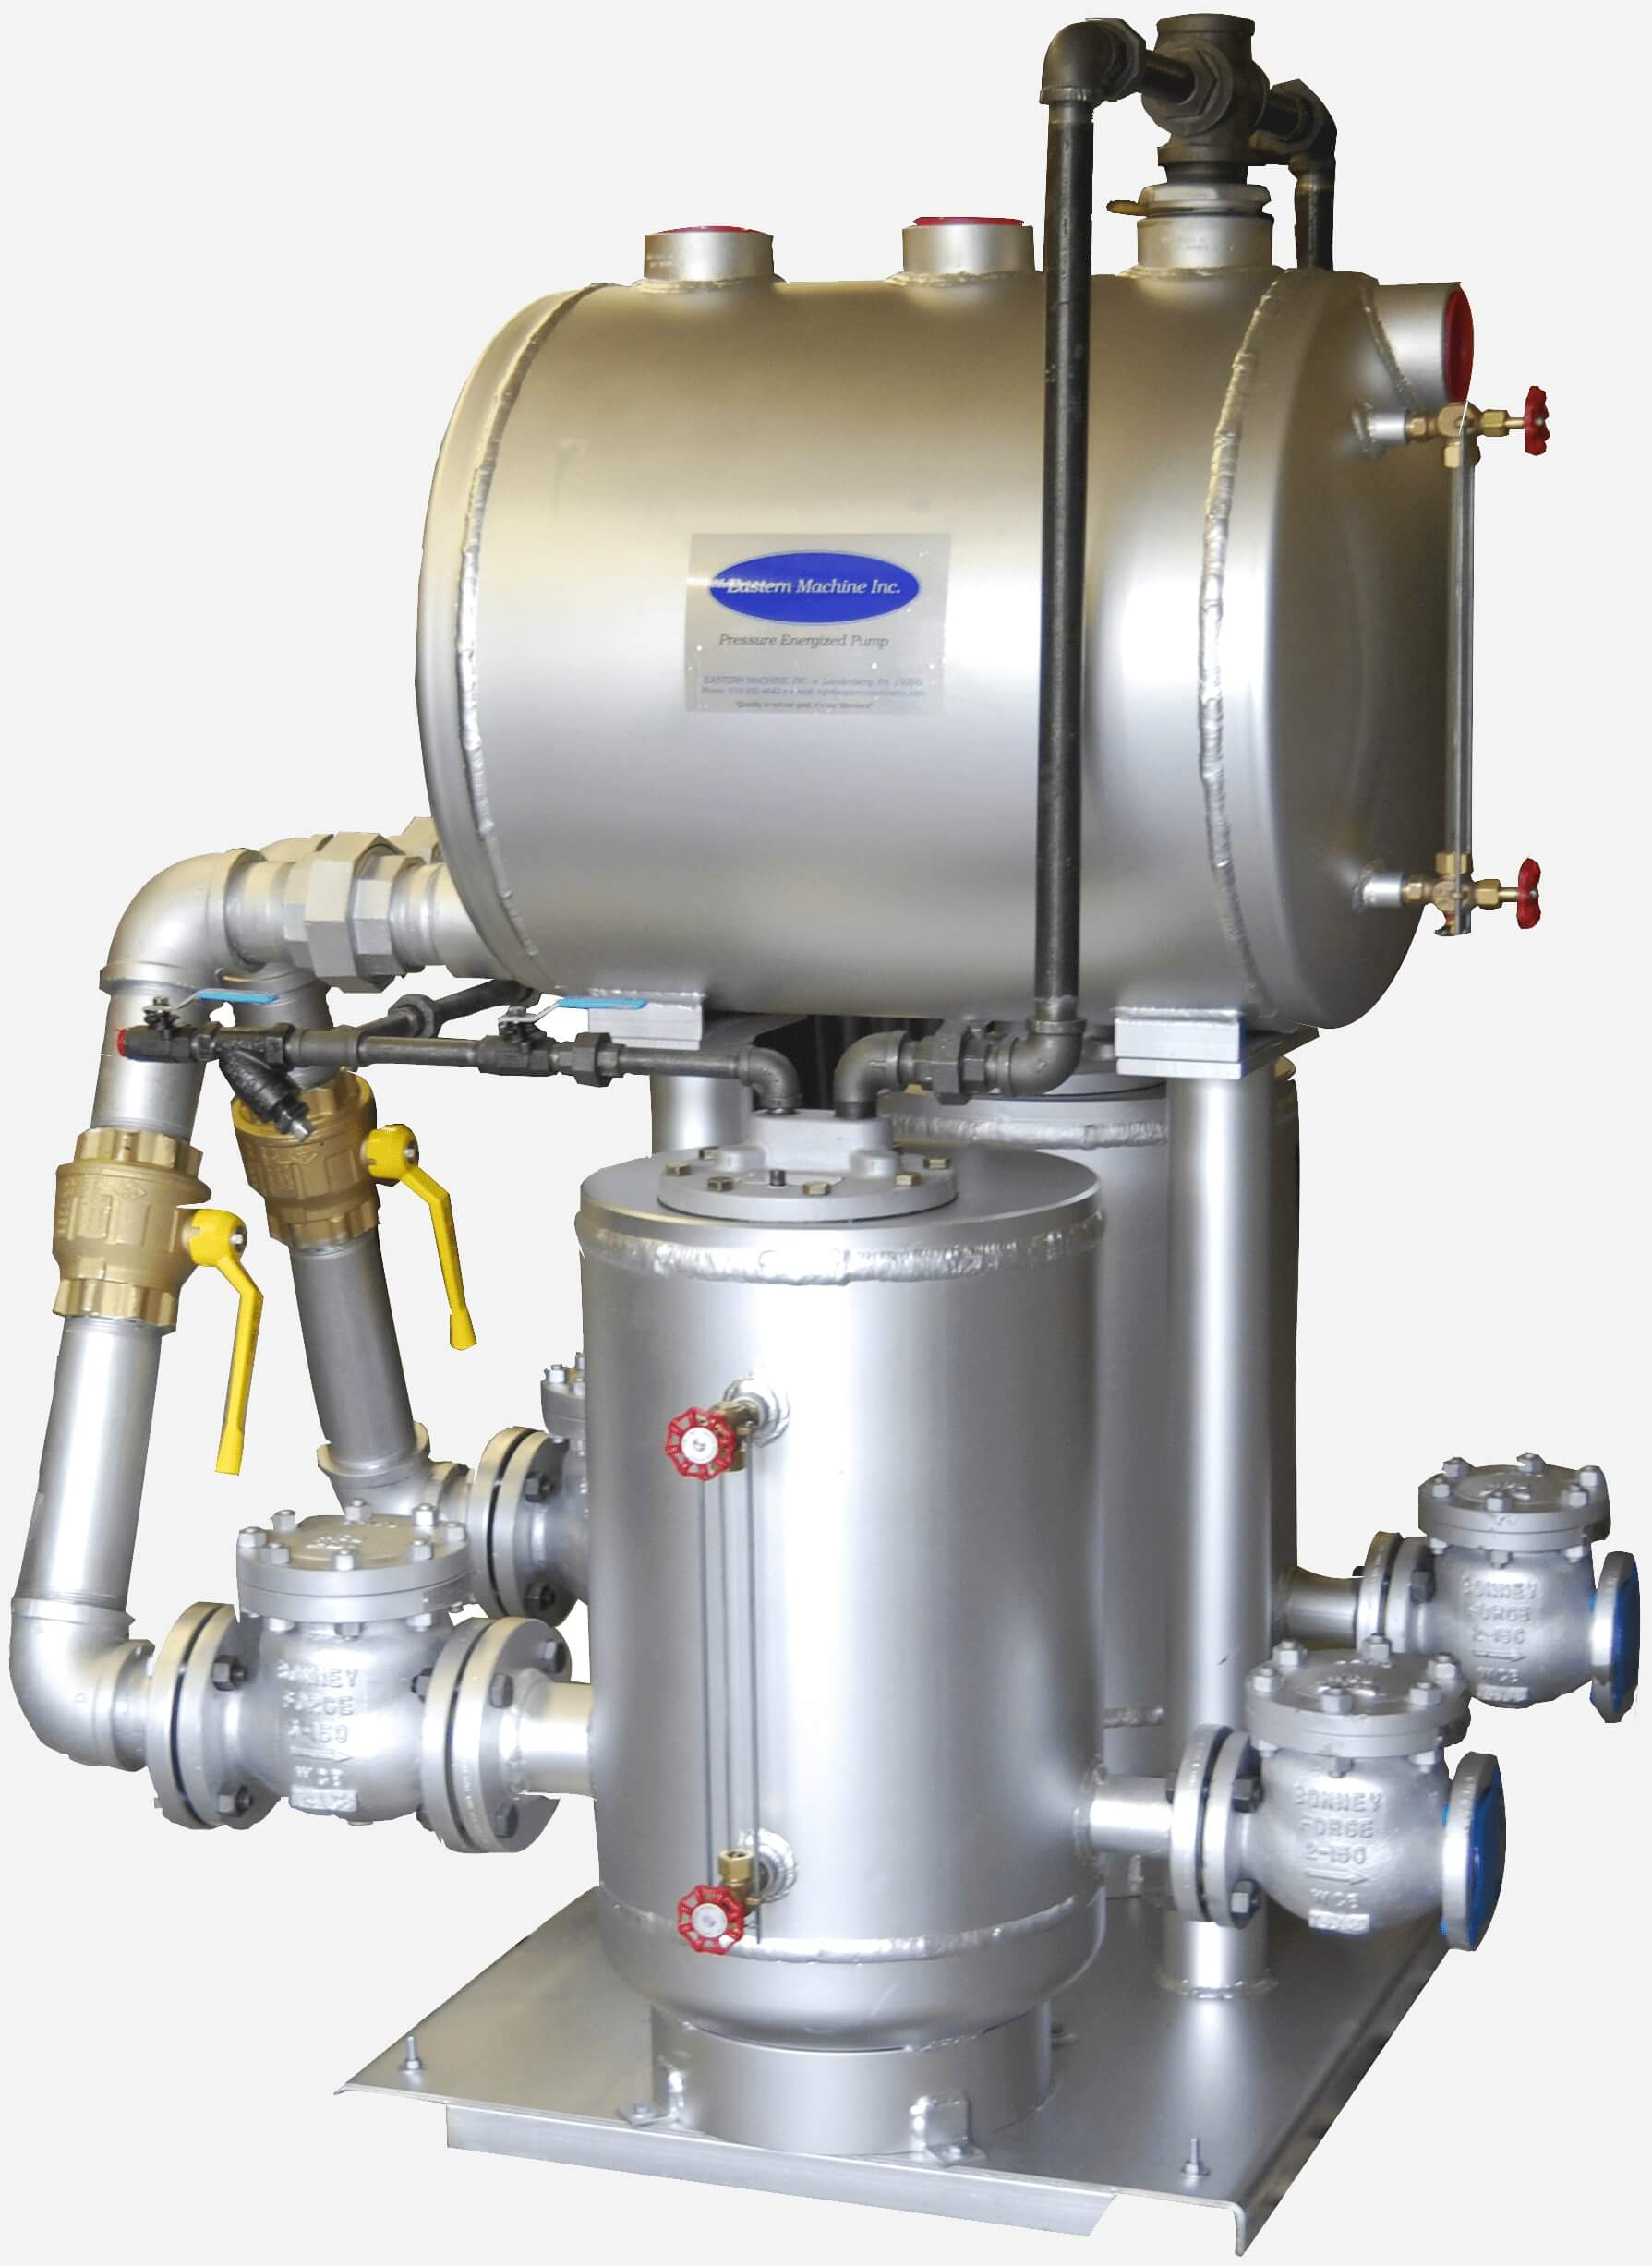 Pressure powered condensate pump